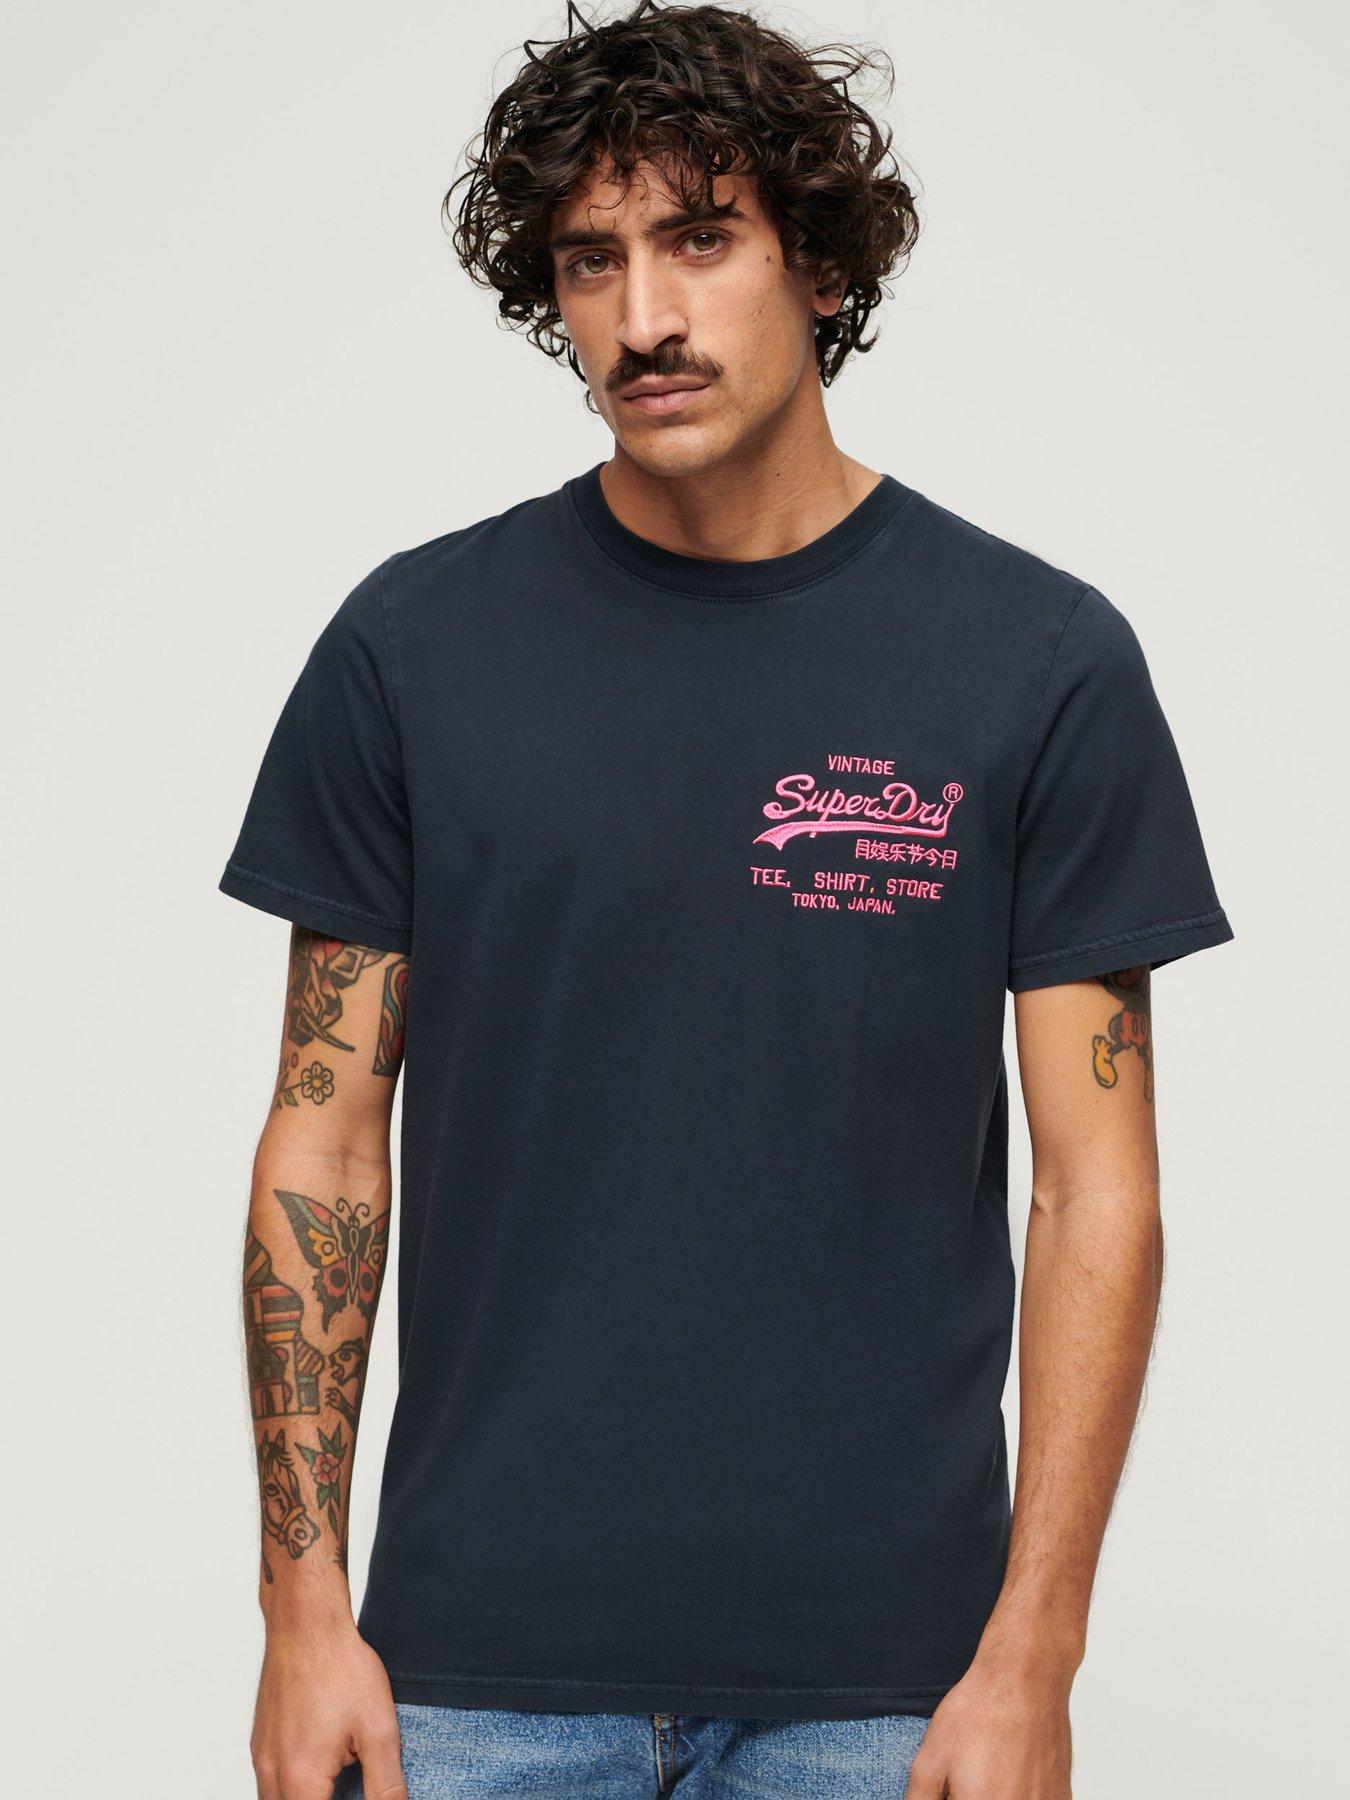 DKNY Fisher Cats Lounge T-Shirt - Black